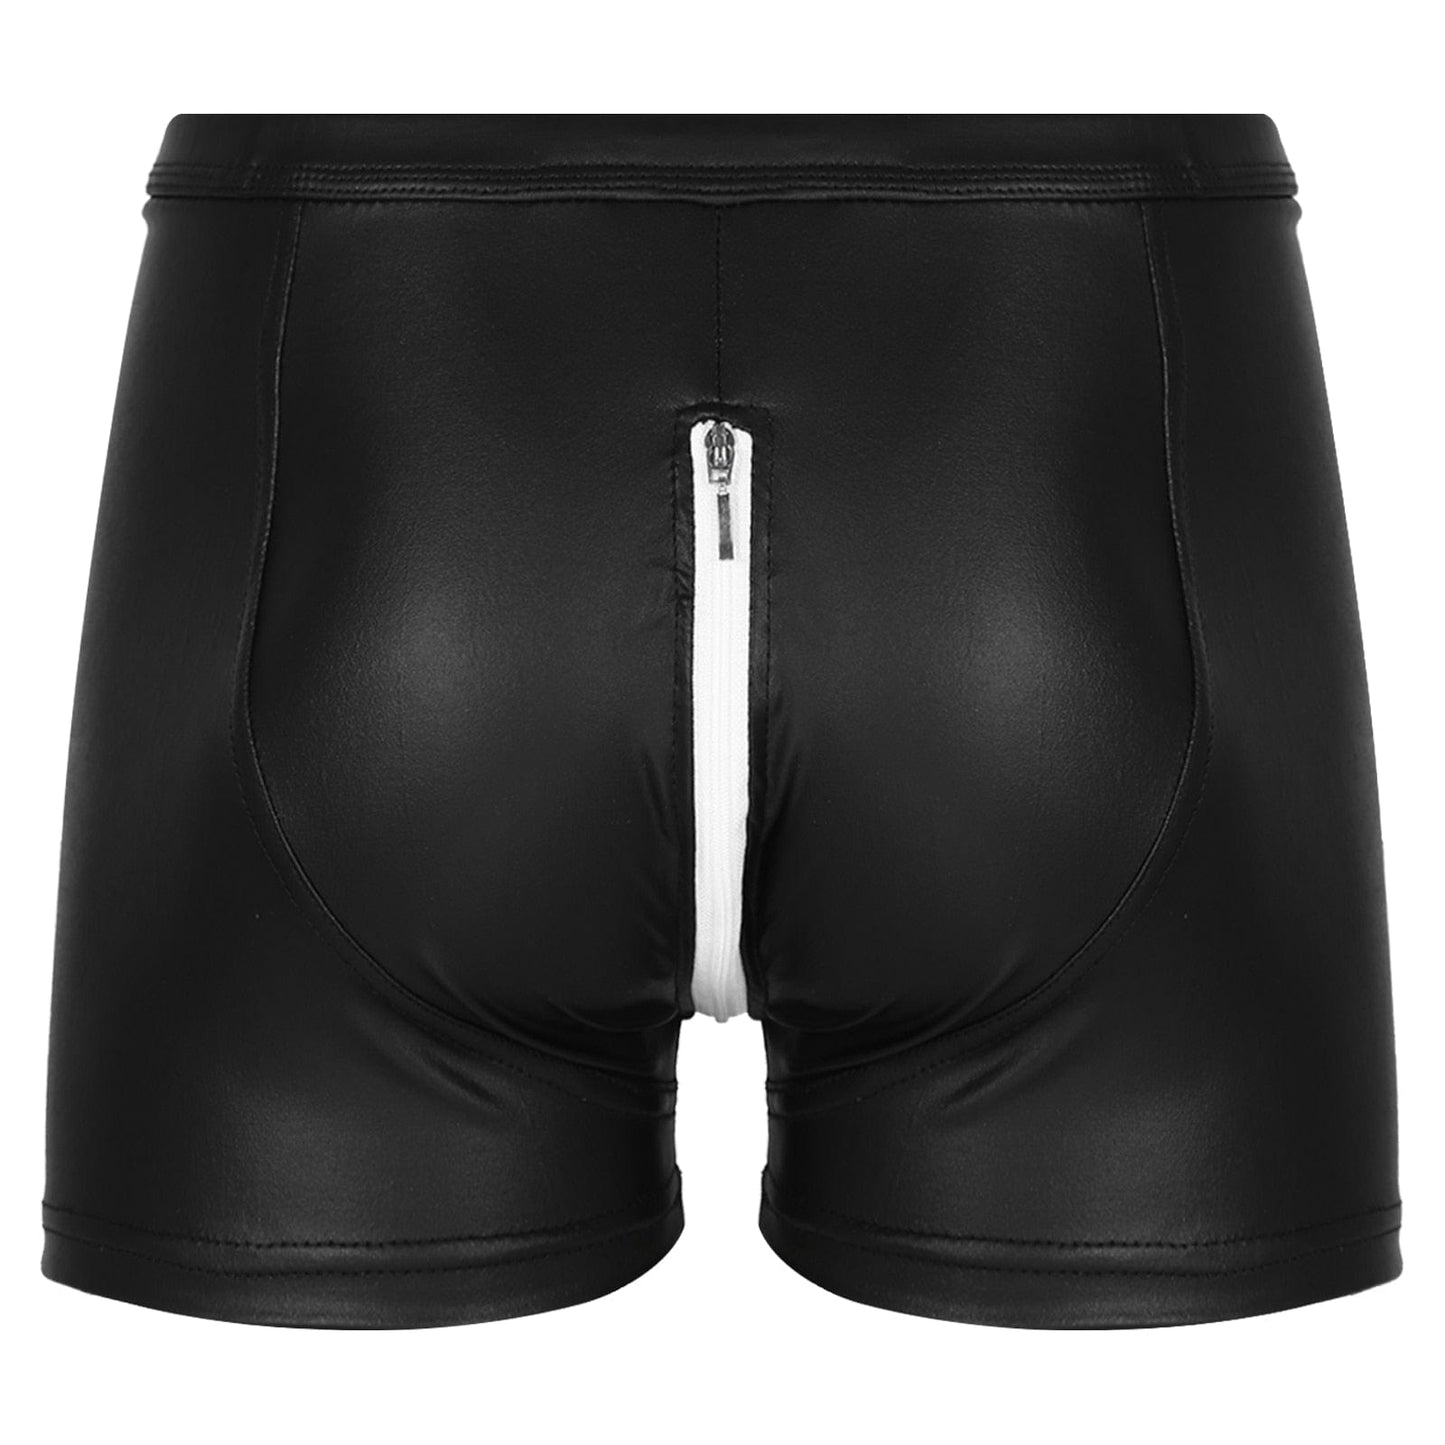 Kinky Cloth Zipper Crotch Boxers Shorts